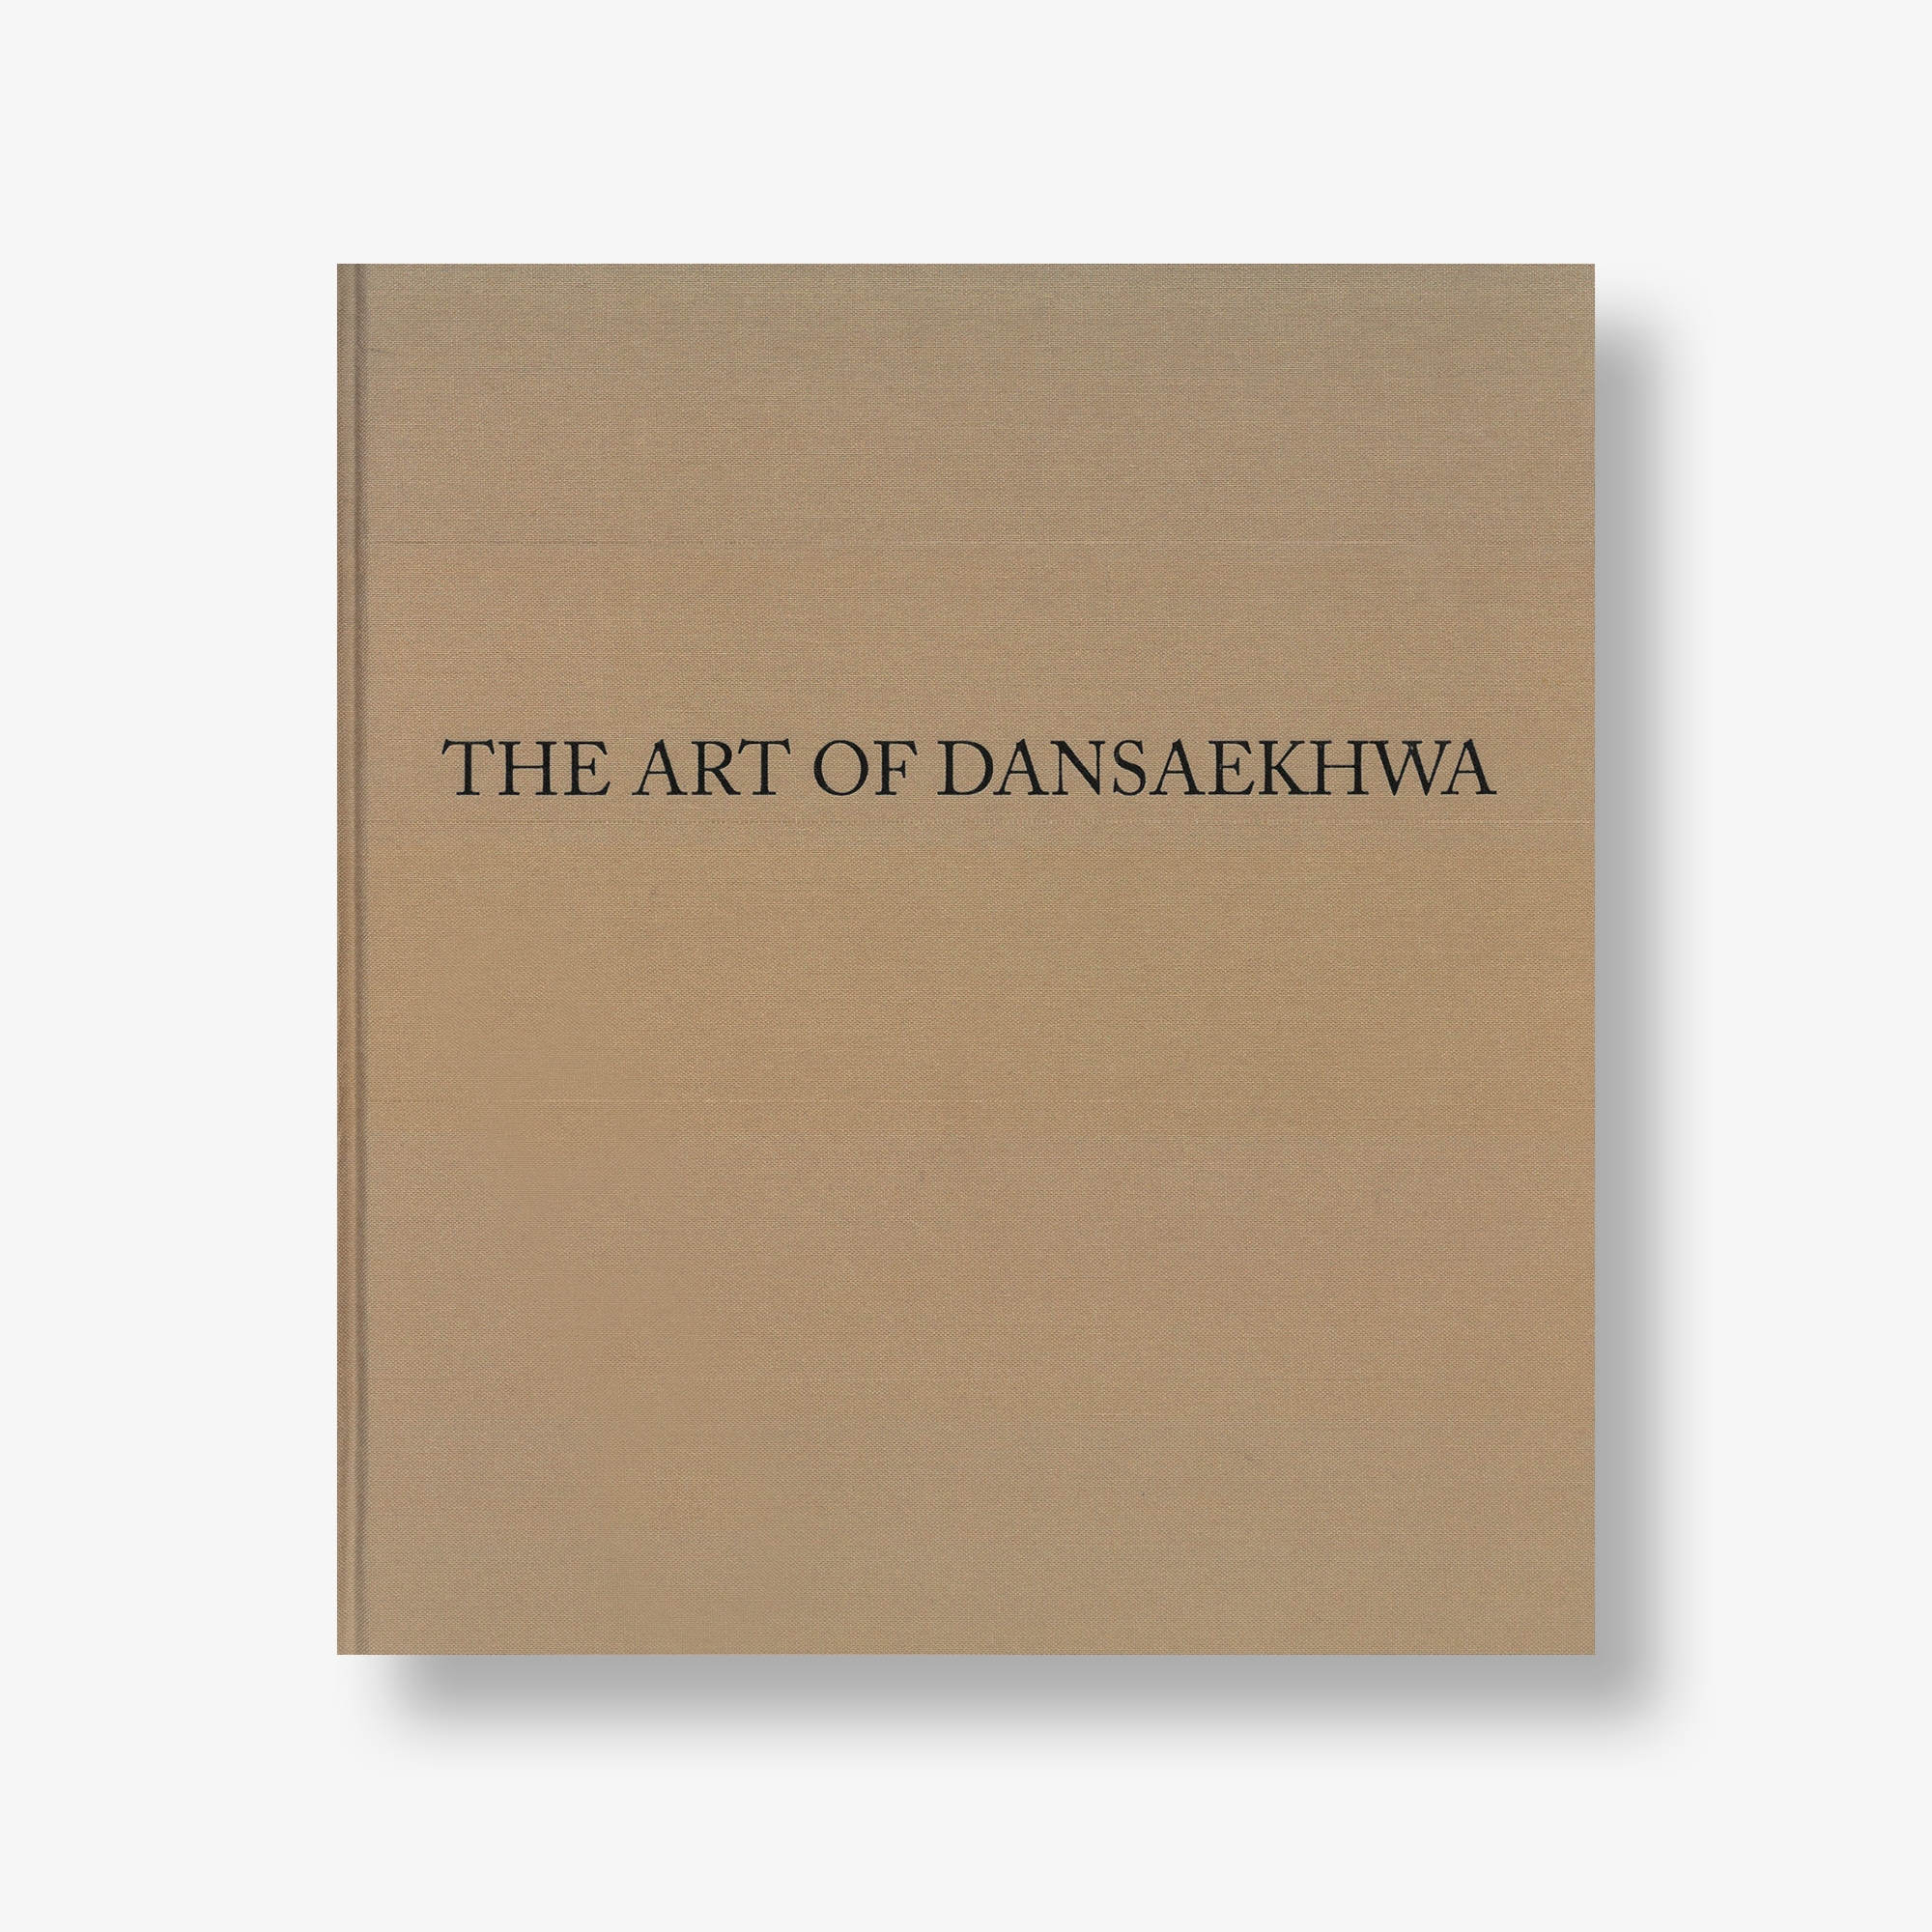 THE ART OF DANSAEKHWA